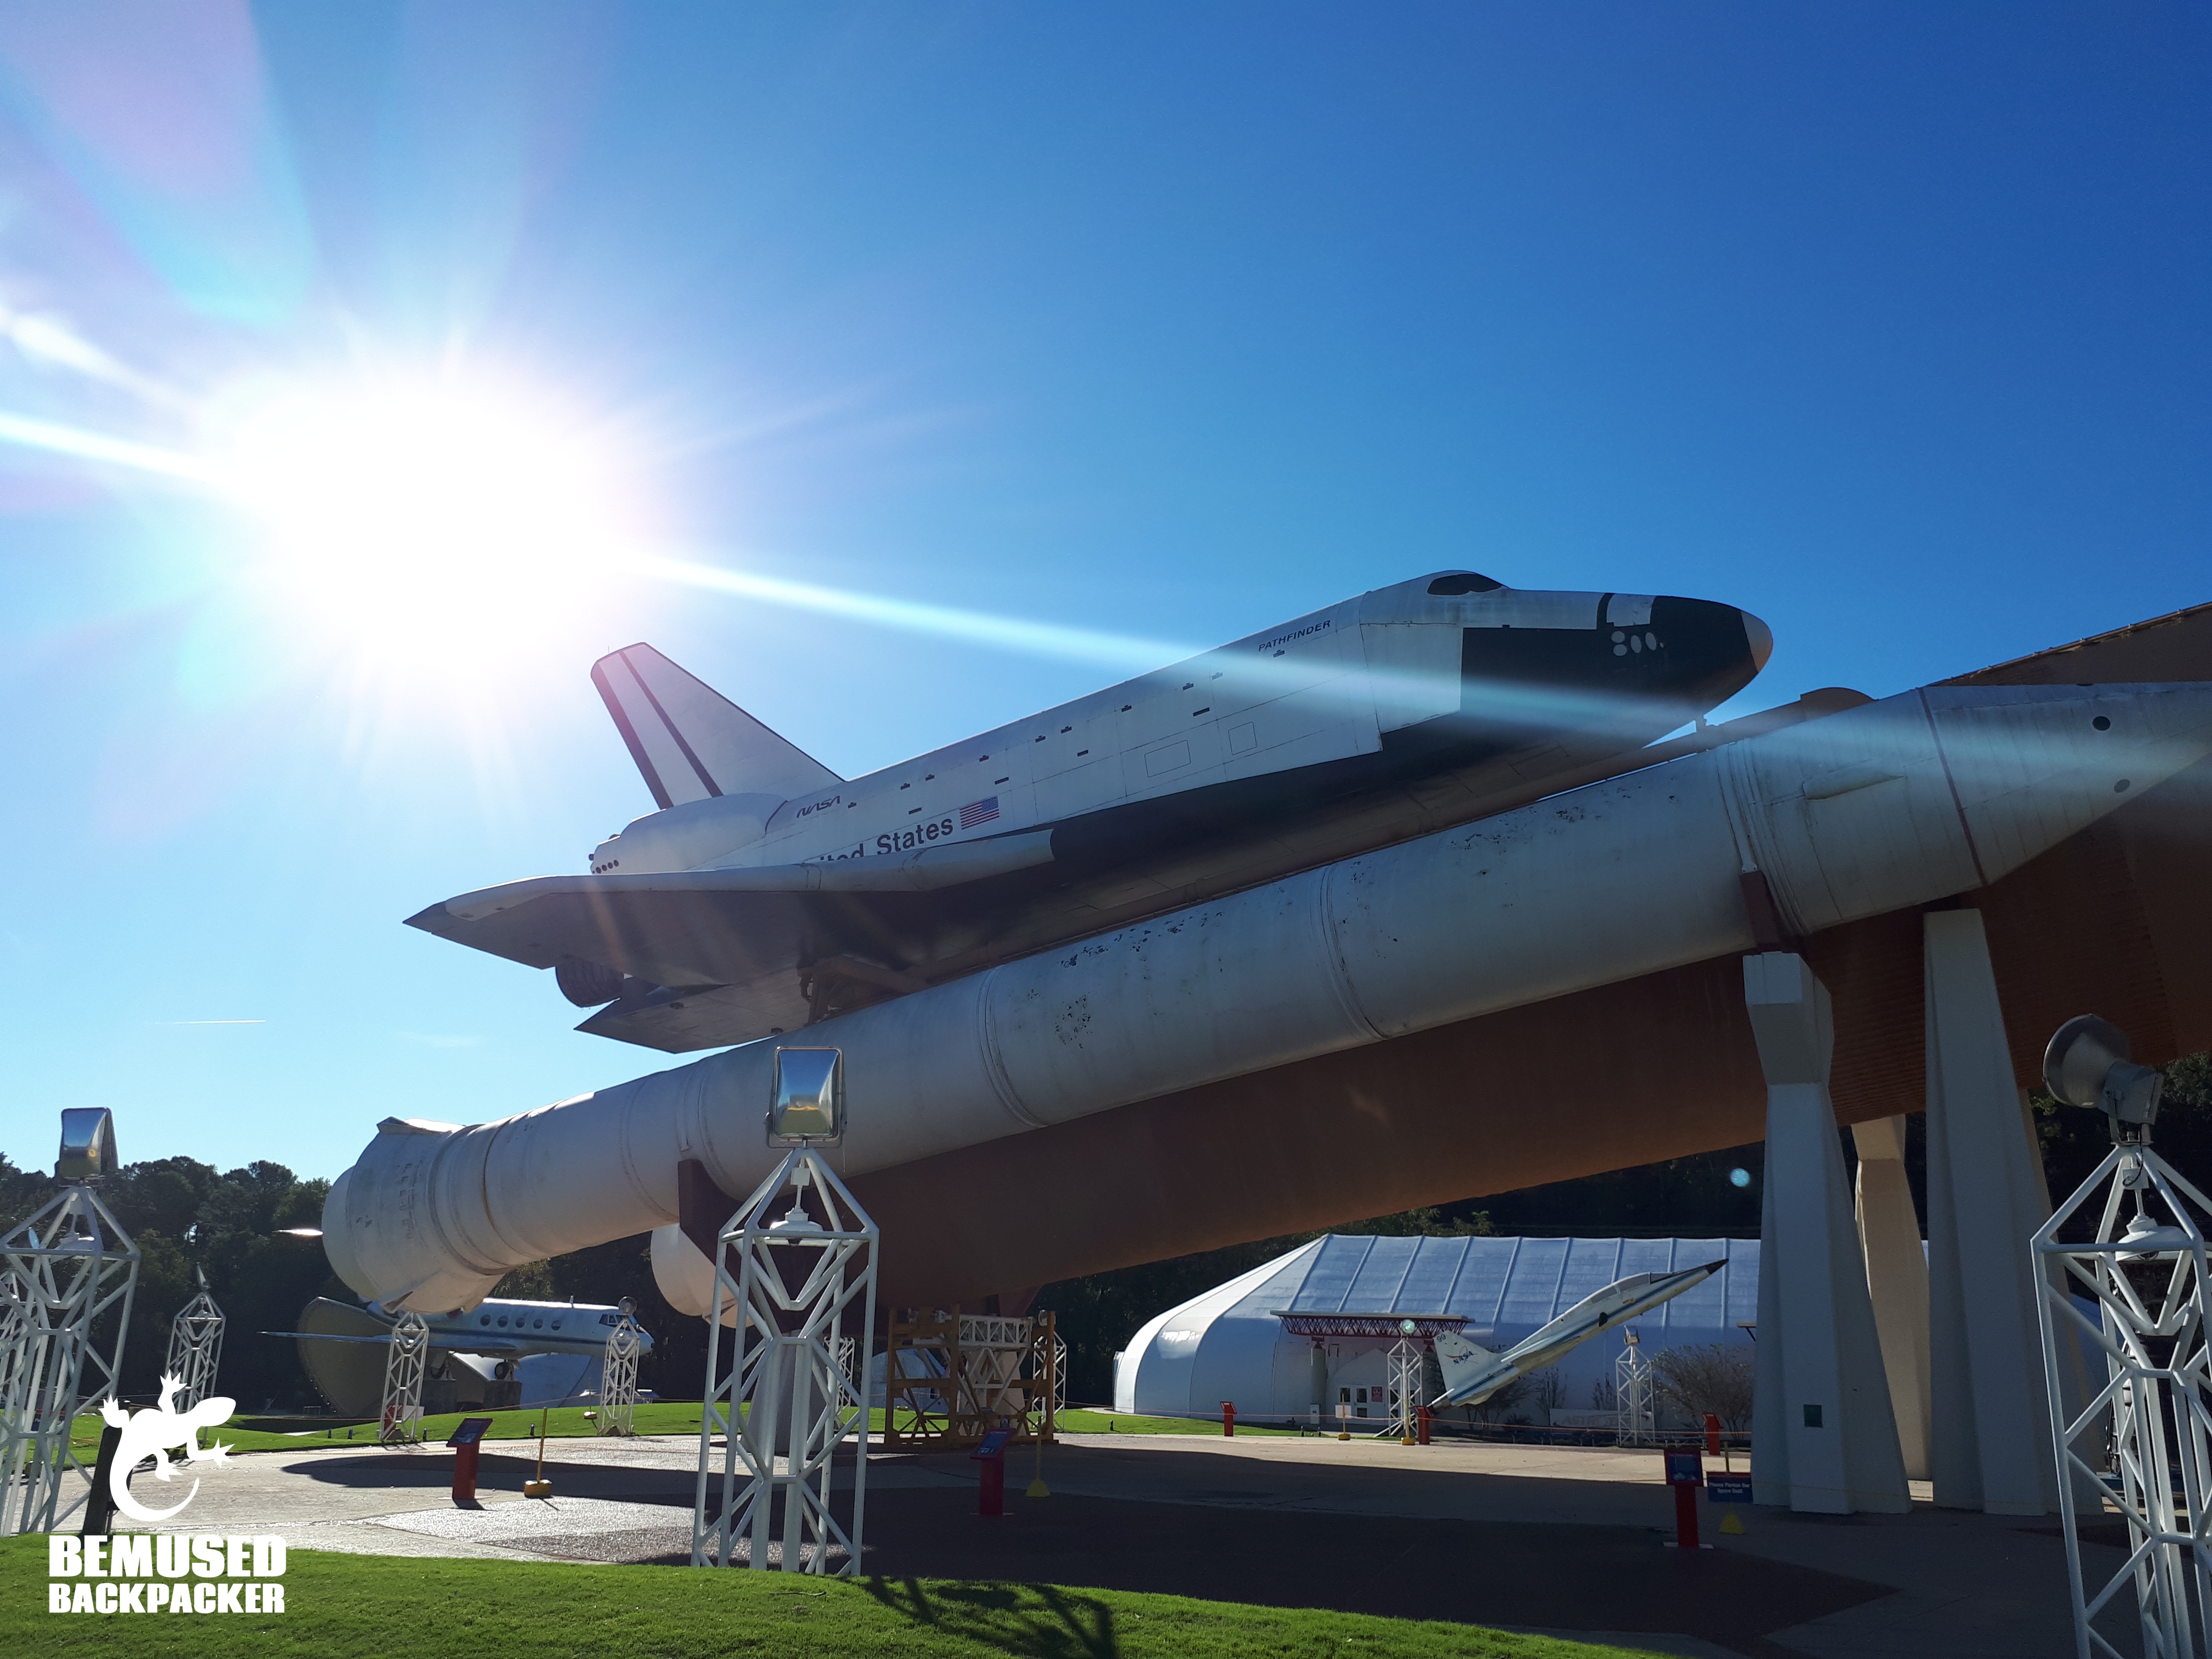 Space Shuttle US Space and Rocket Centre Huntsville Alabama